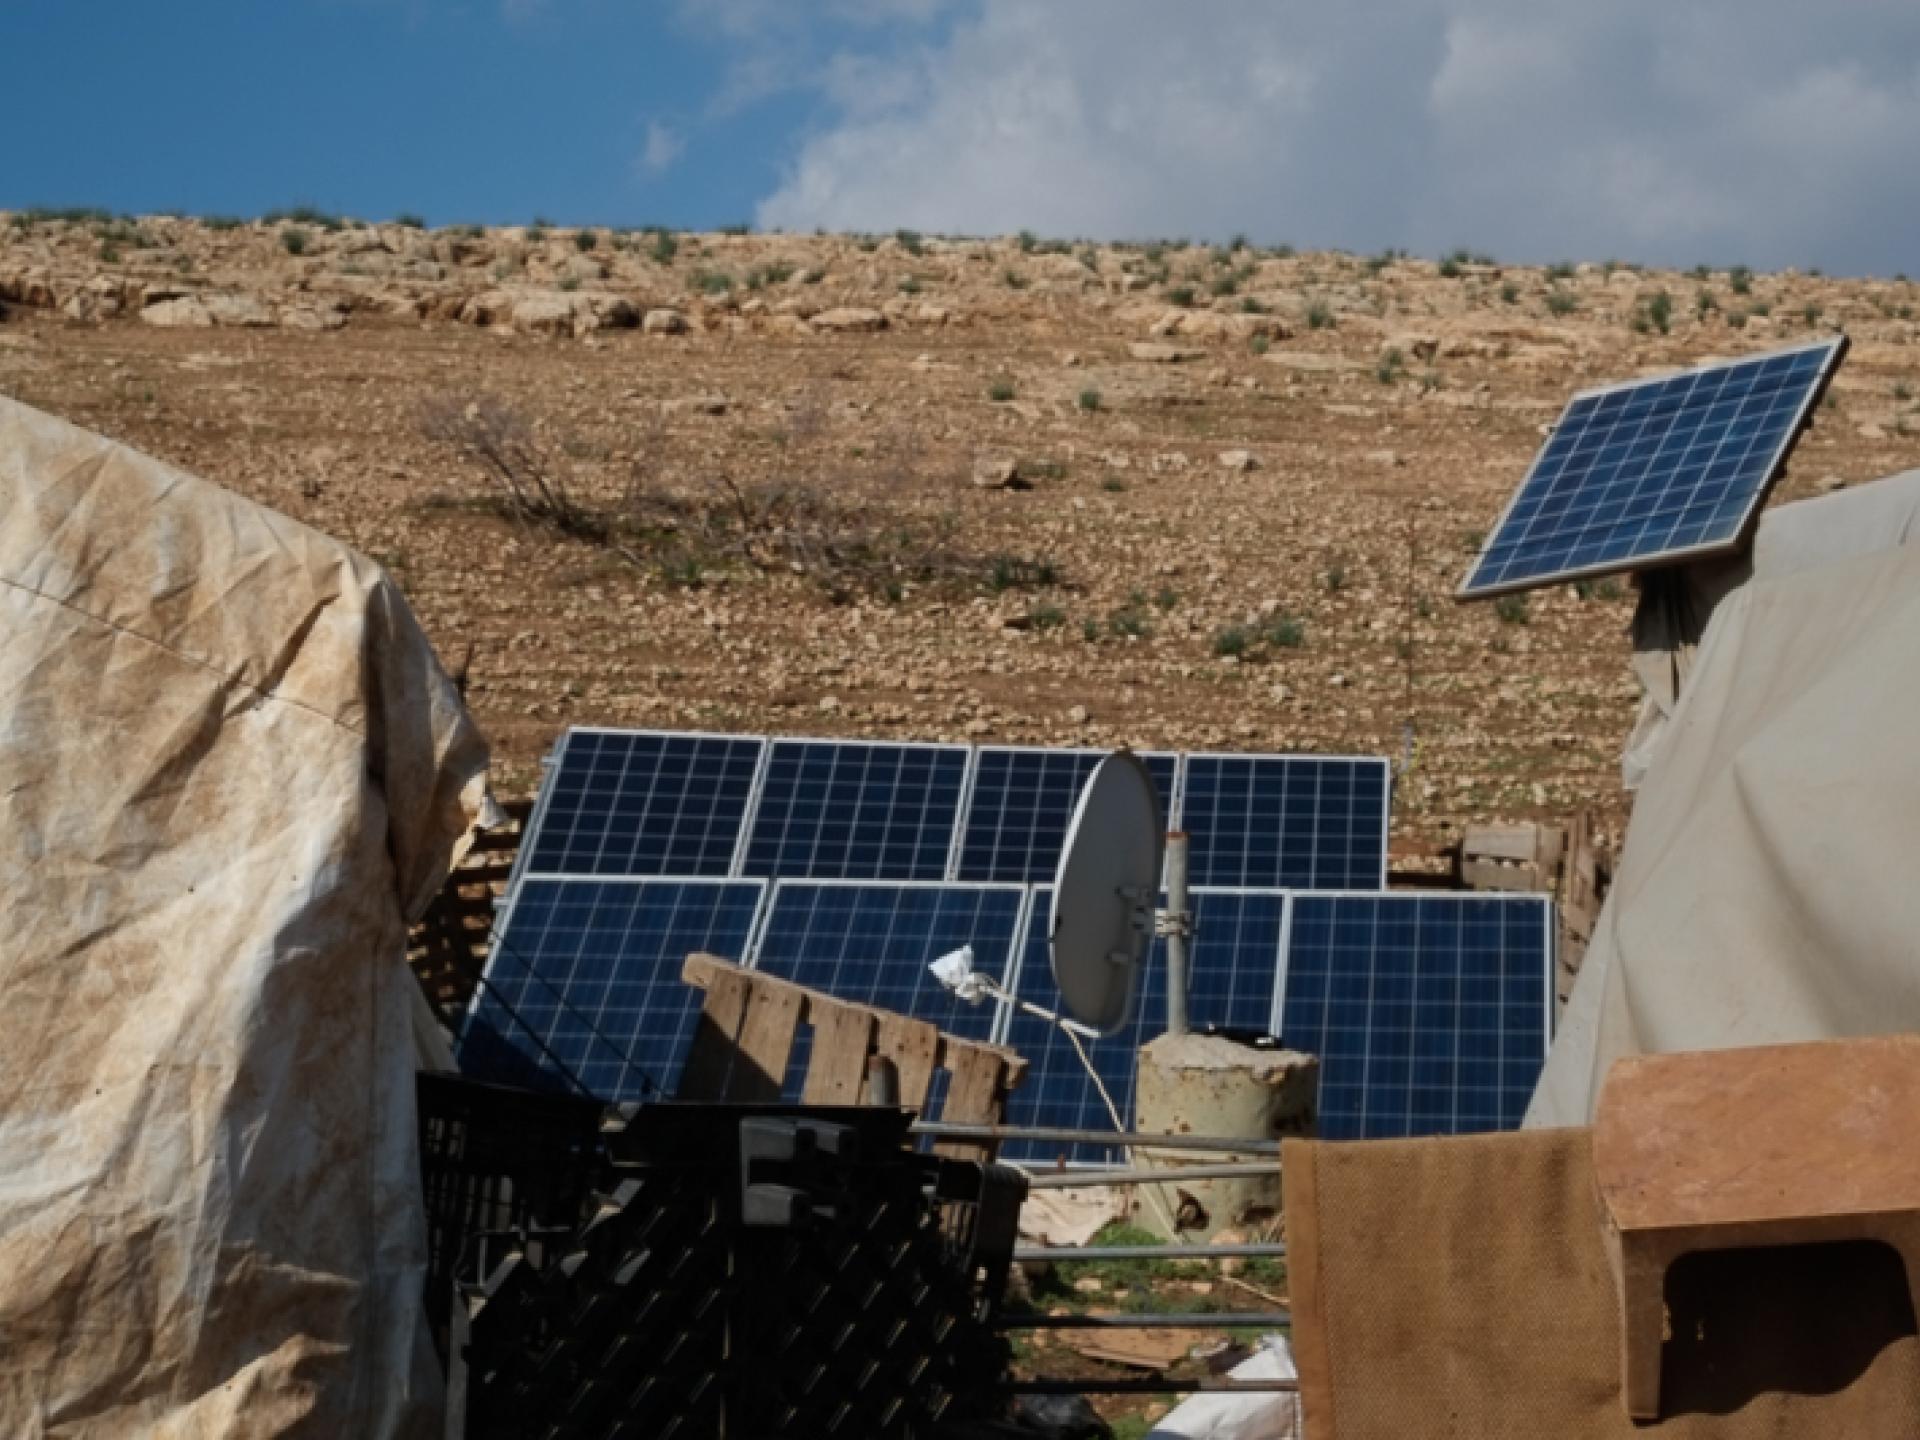 Solar energy panels in the shepherds encampment in the Jordan Valley